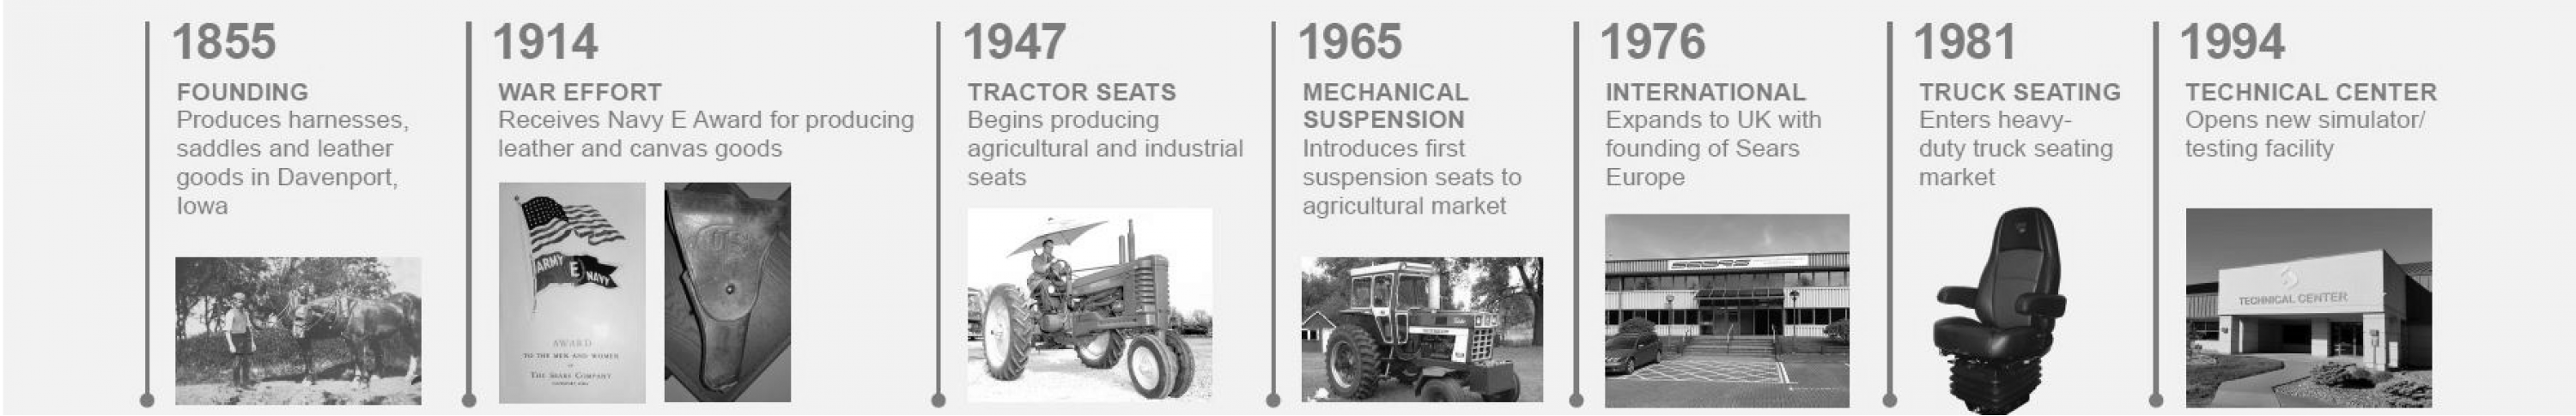 Sears History Timeline